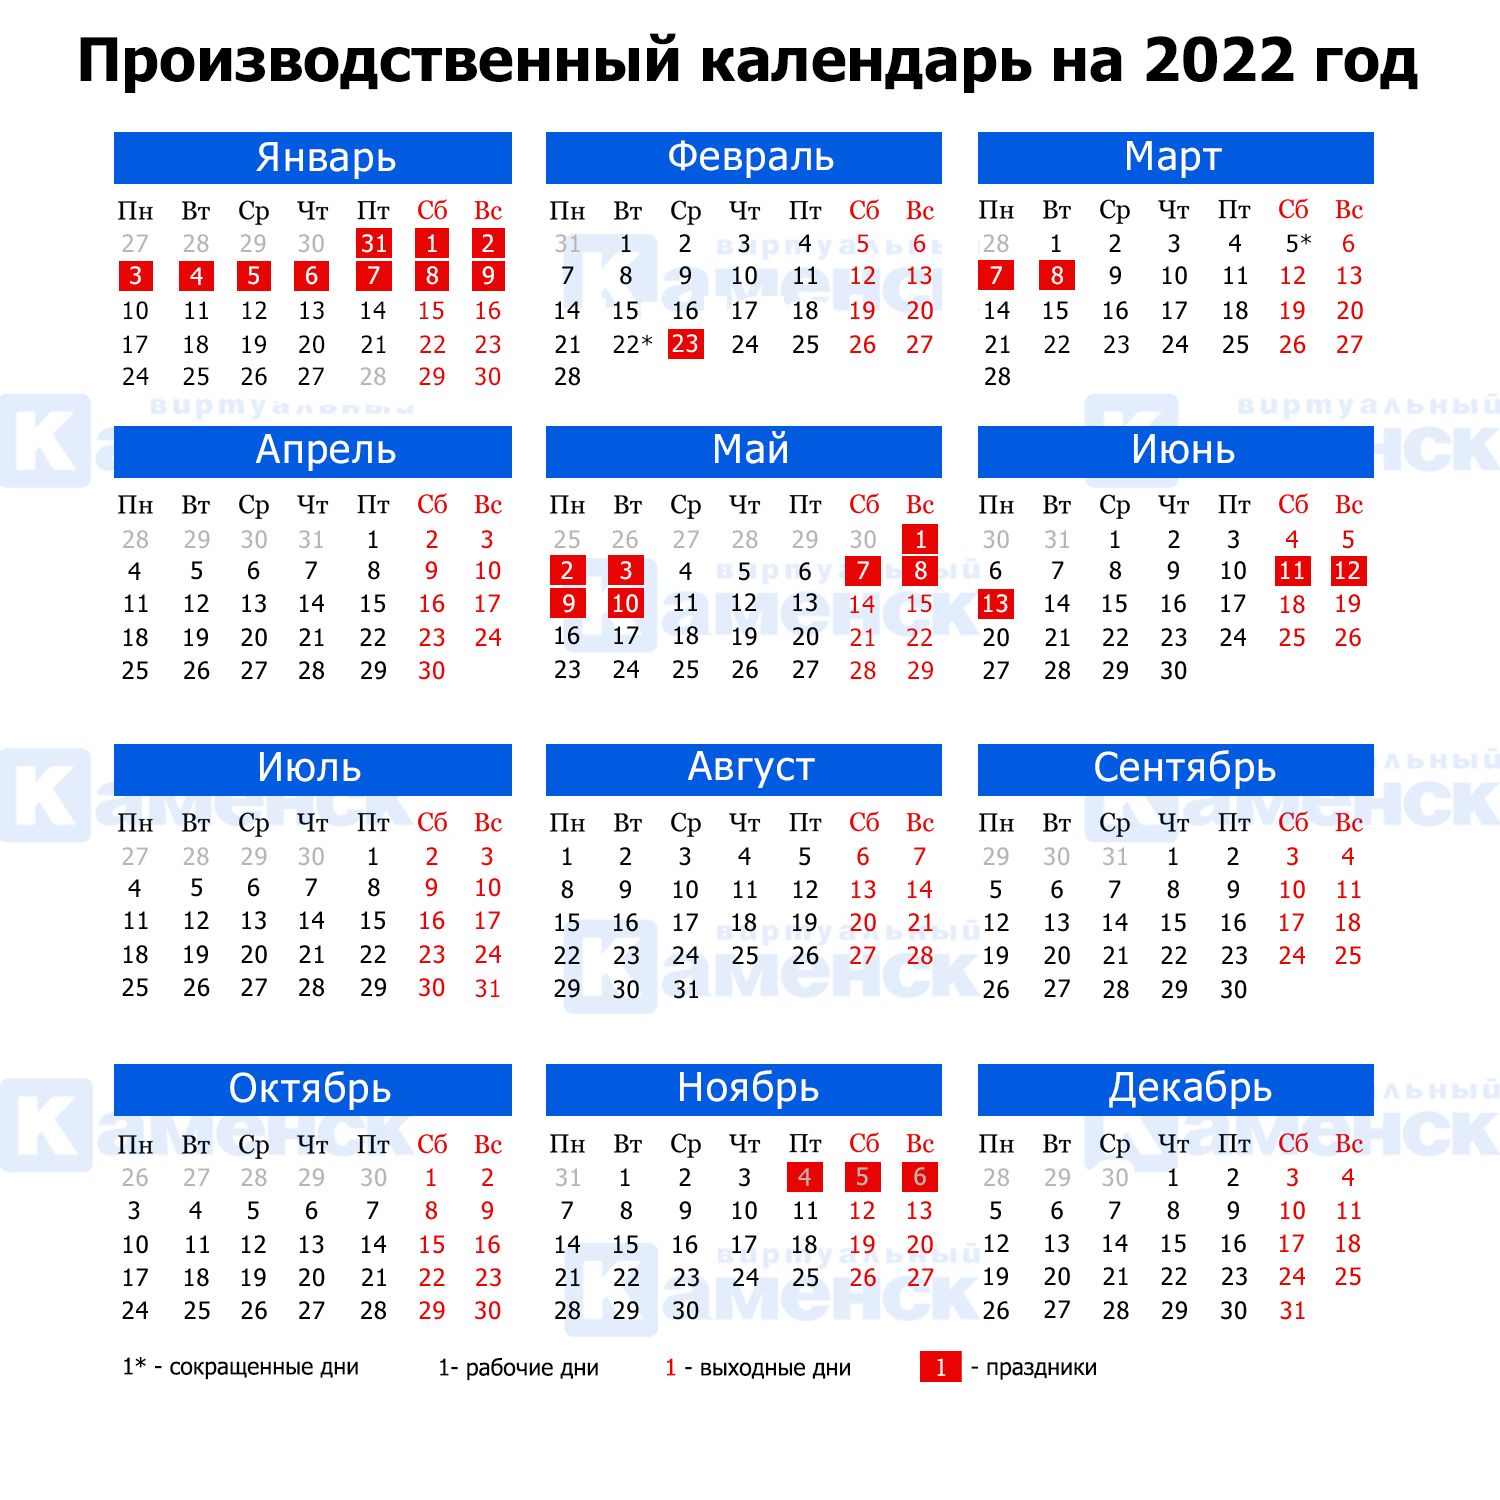 Календарь дат 2022. Производственный календарь 2022 Башкортостан. Производственный календарь на 2022 год. Производственный календарь на 2022 горд. Проихвосдтвенныйткалендарь 2022.